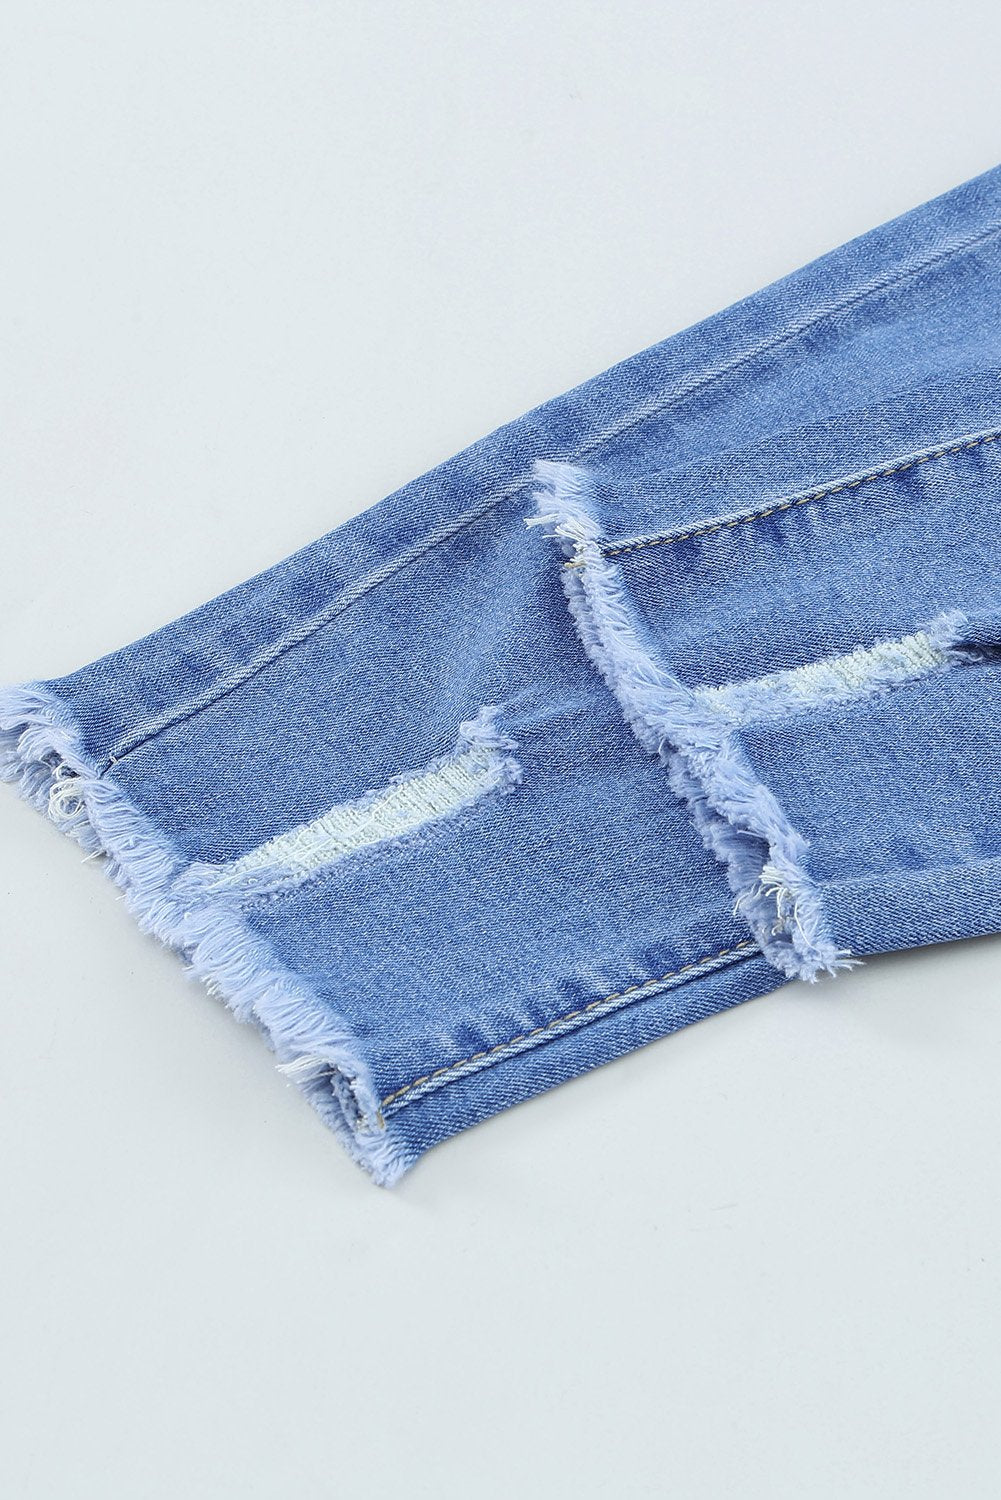 Fashion Sky Blue Drawstring Elastic Waist Hole Ripped Jeans